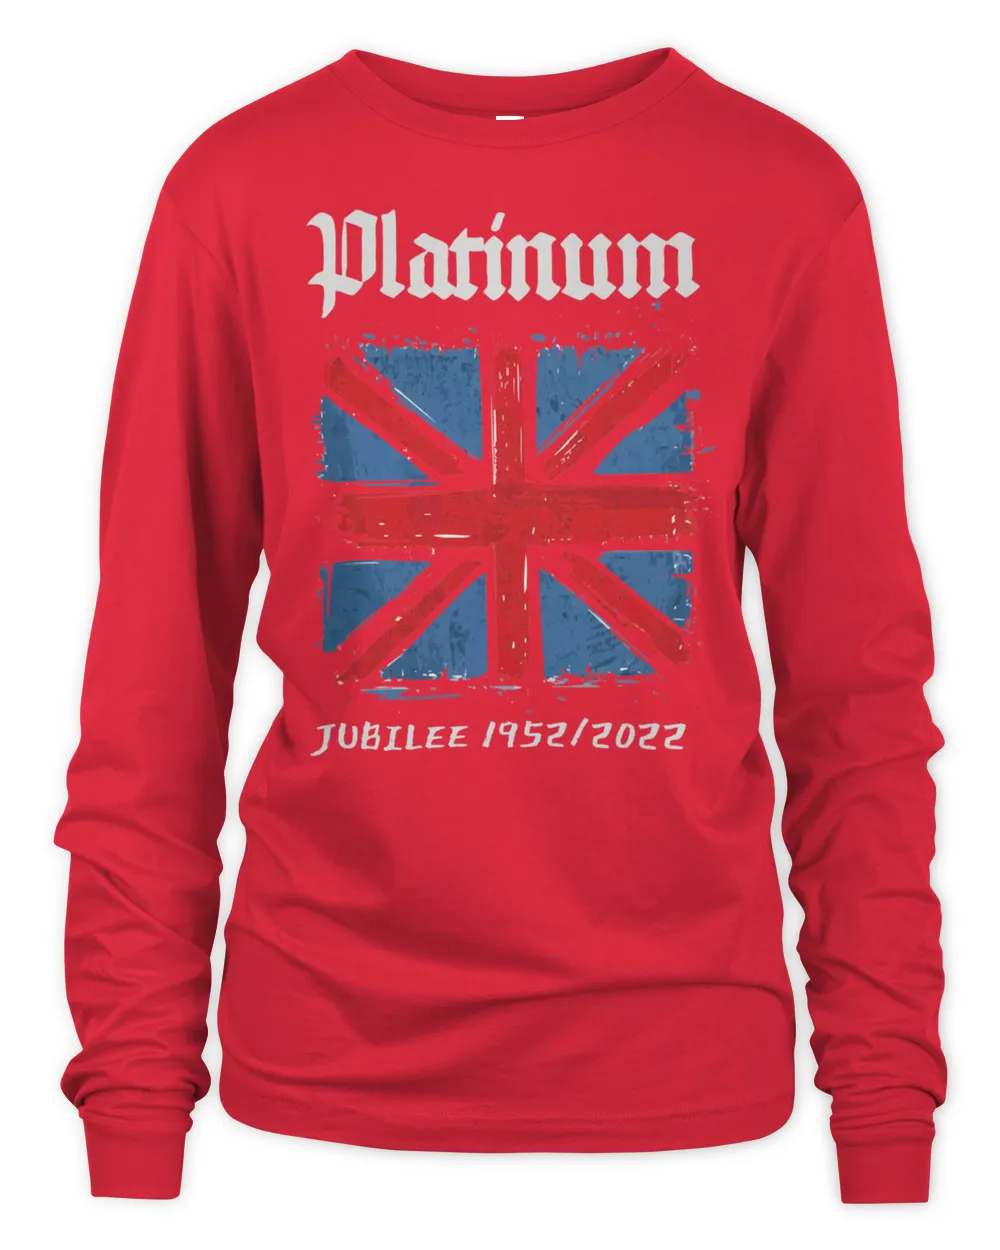 Platinum Jubilee T-Shirt